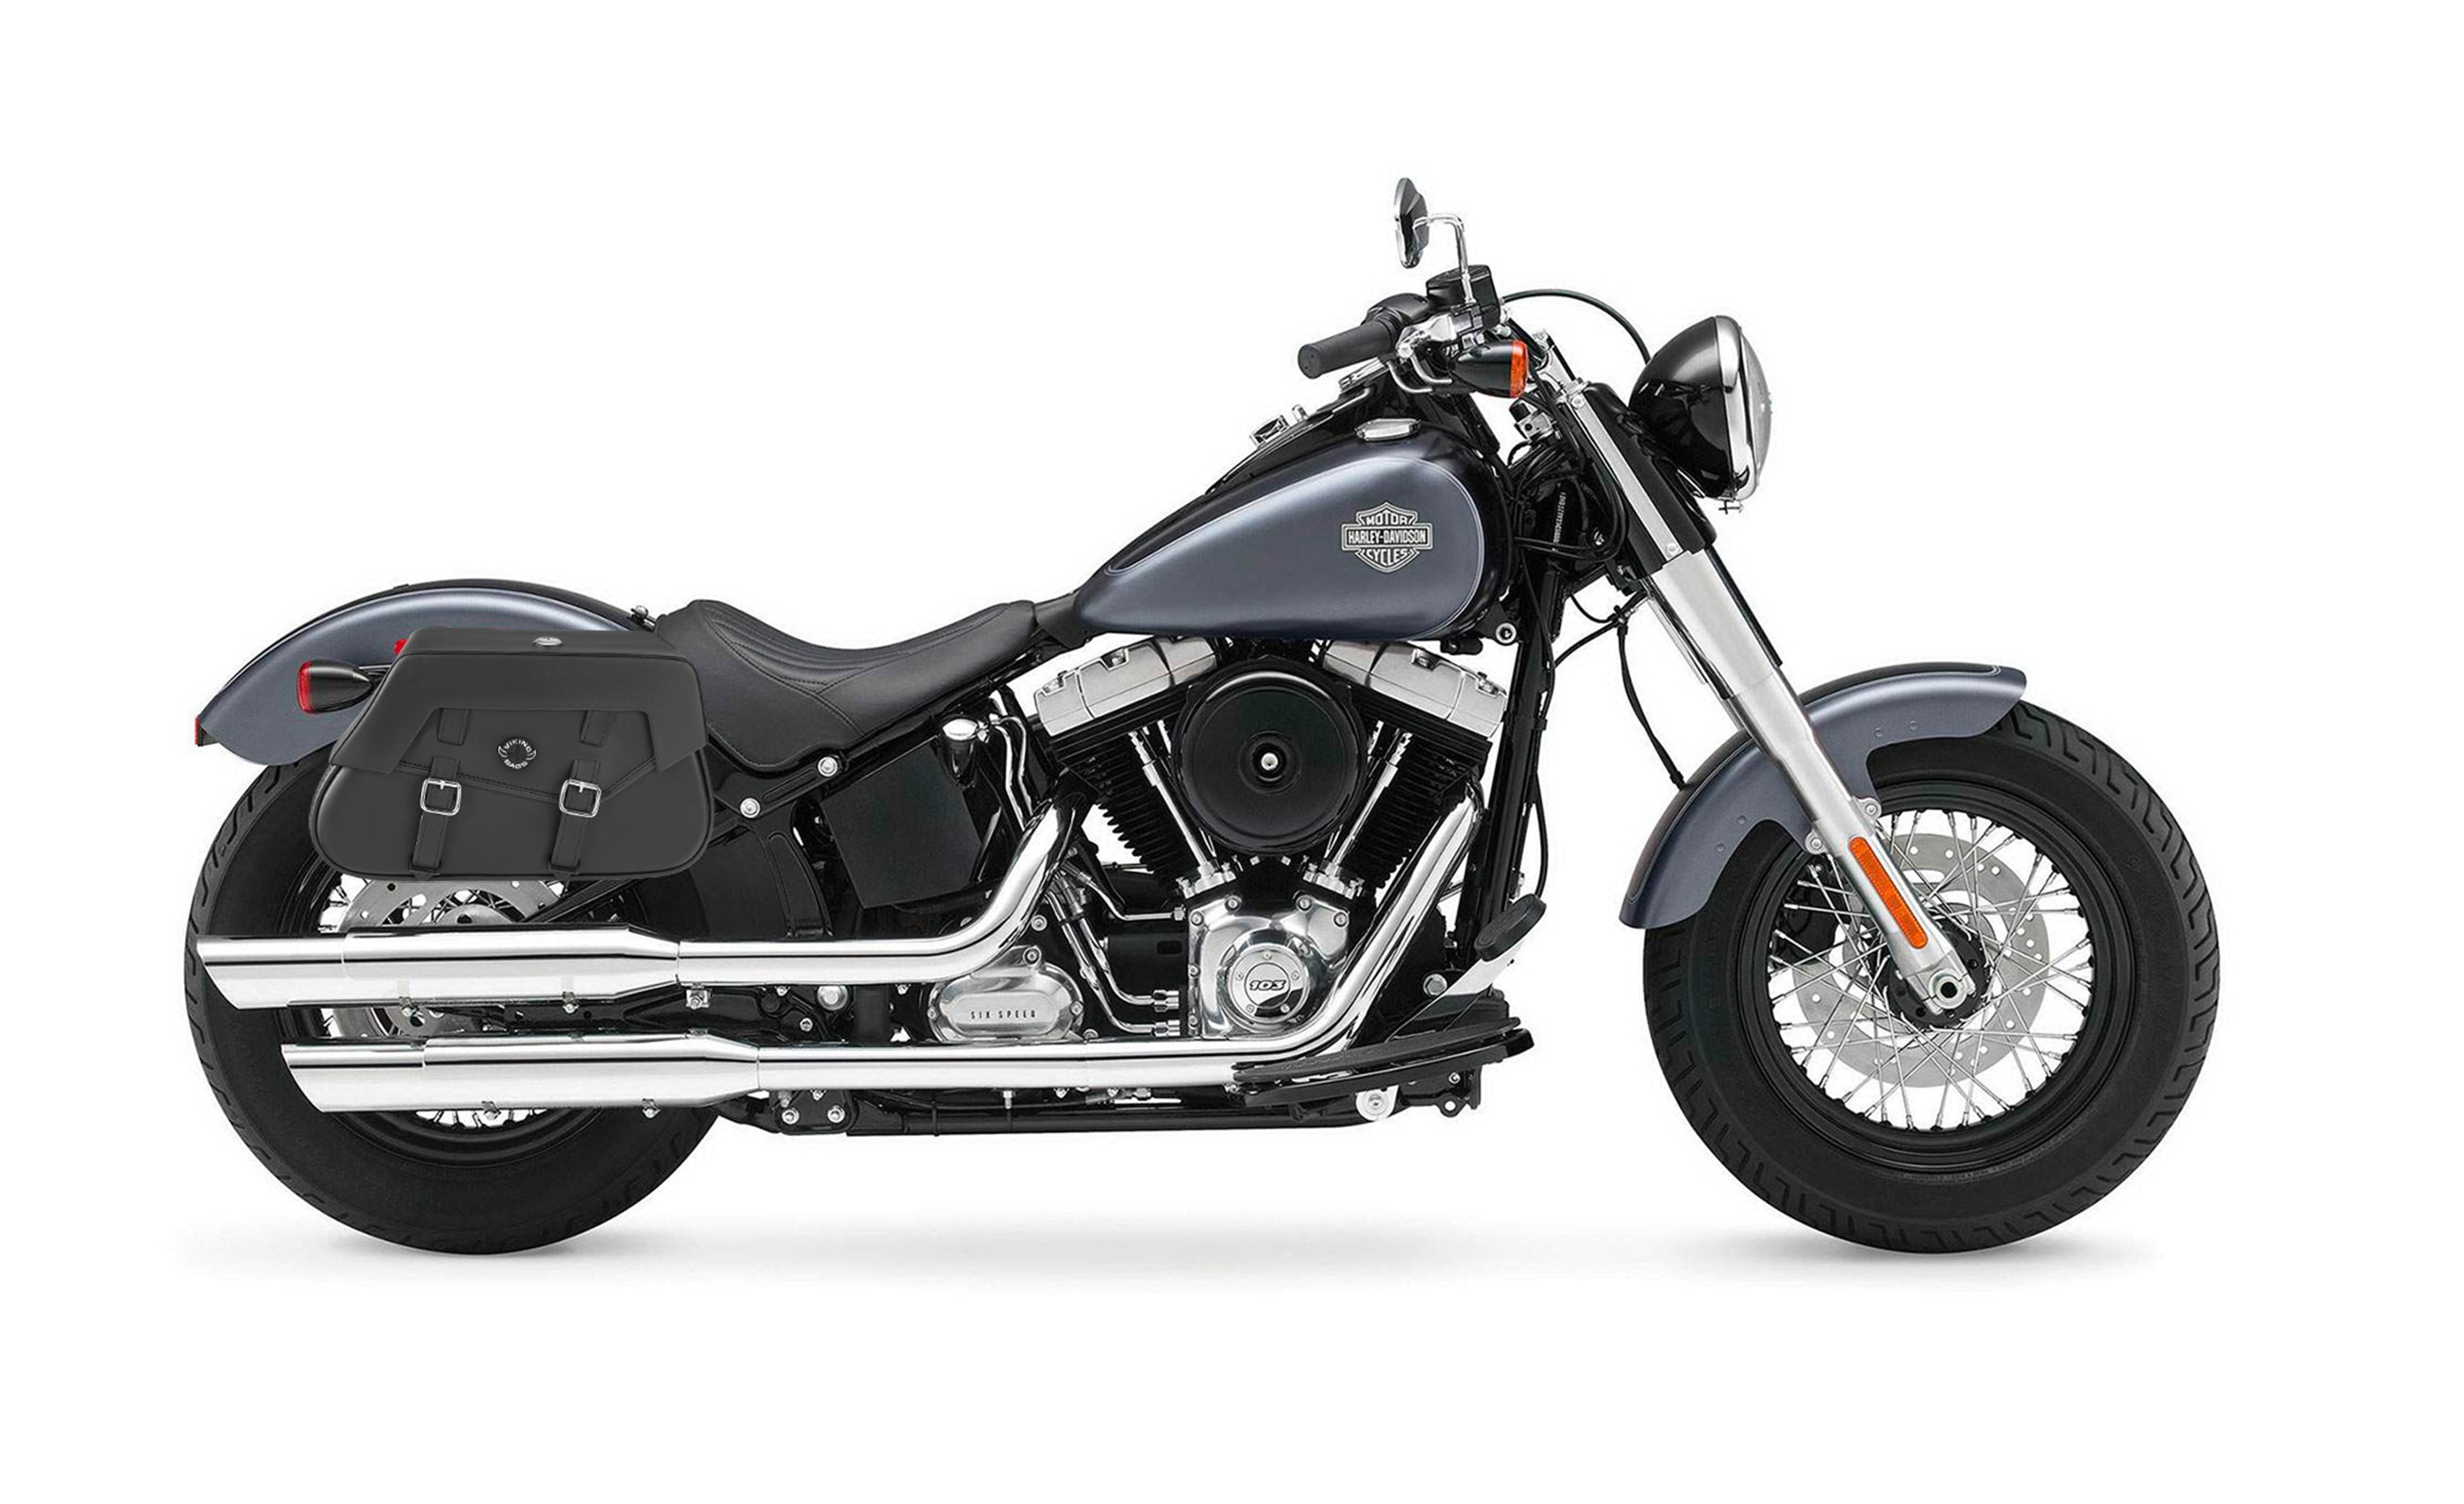 14L - Loki Classic Small Leather Motorcycle Saddlebags for Harley Softail Slim FLS on Bike Photo @expand